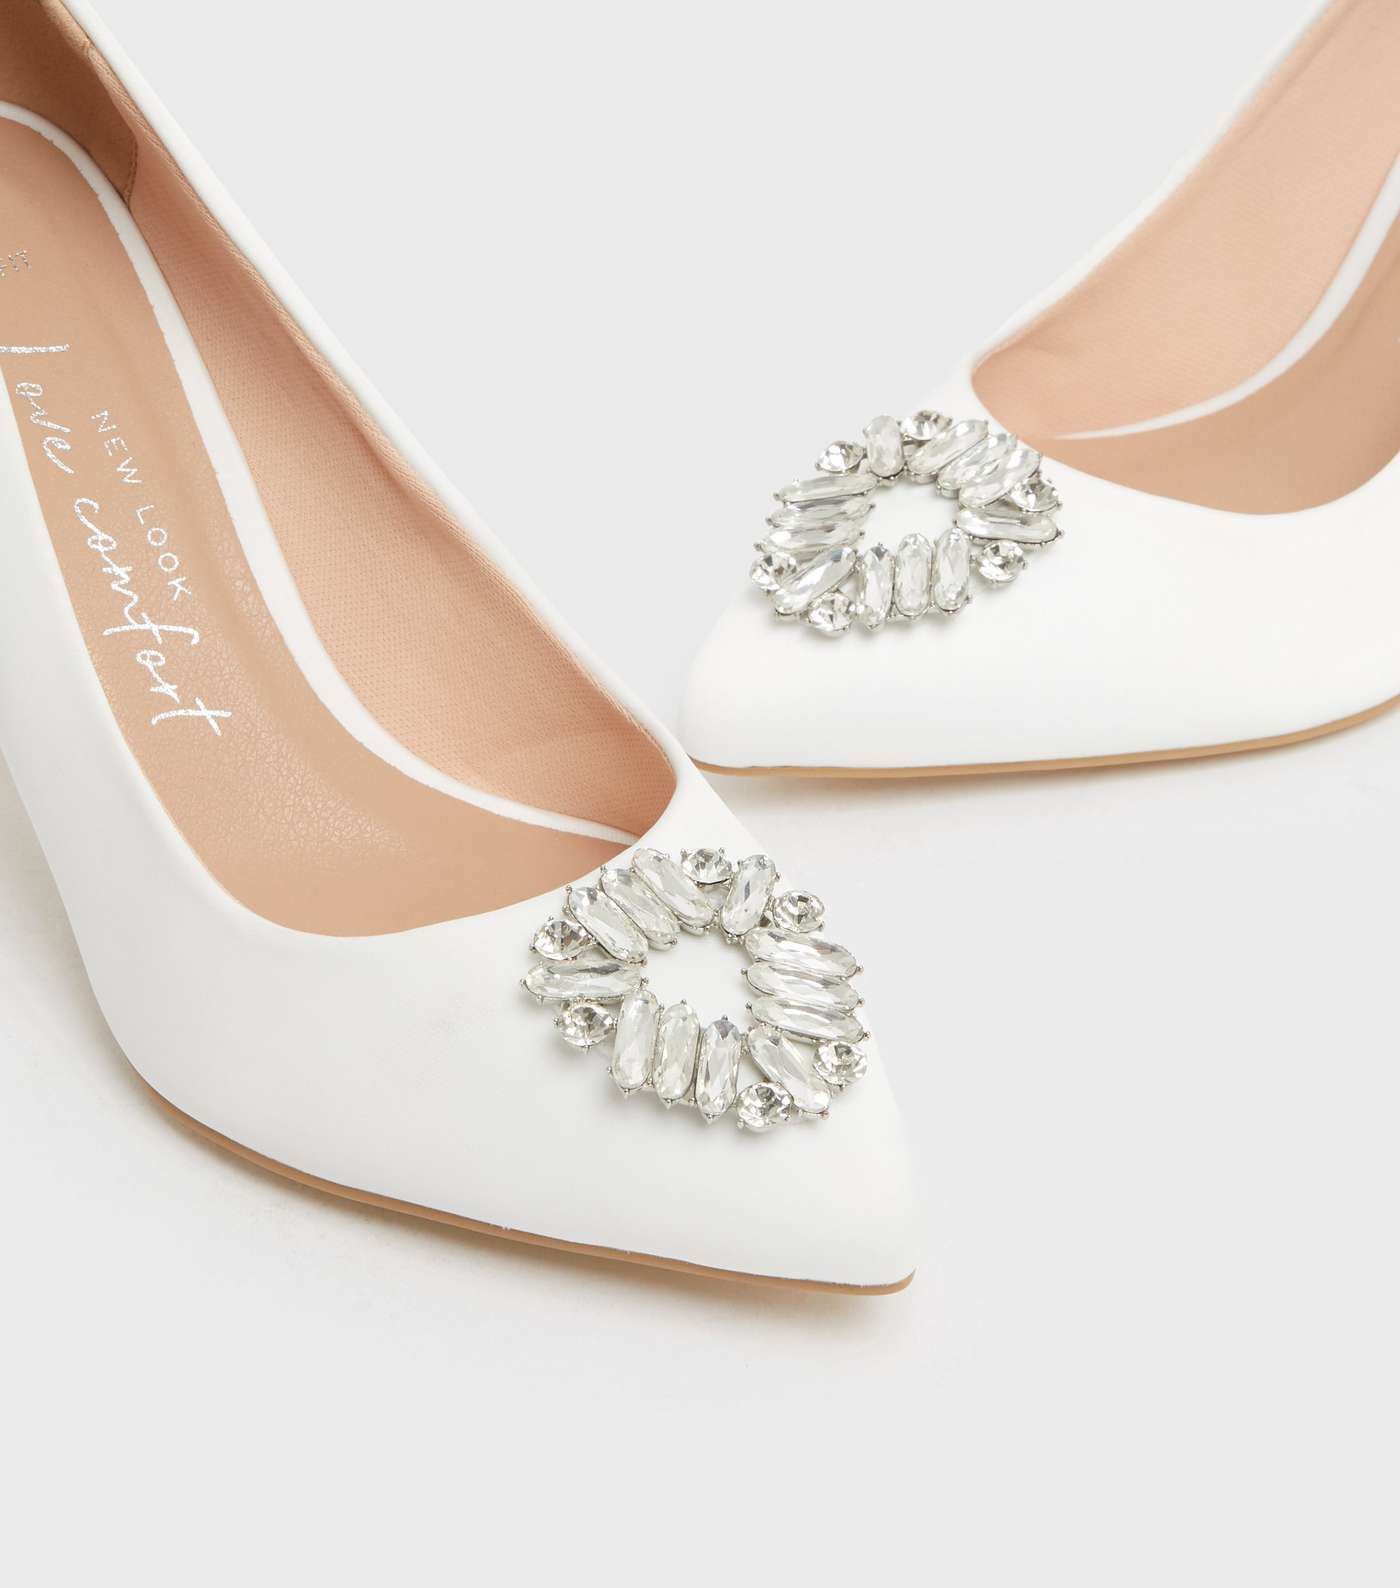 Wide Fit White Bridal Satin Gem Stiletto Heel Court Shoes Image 3